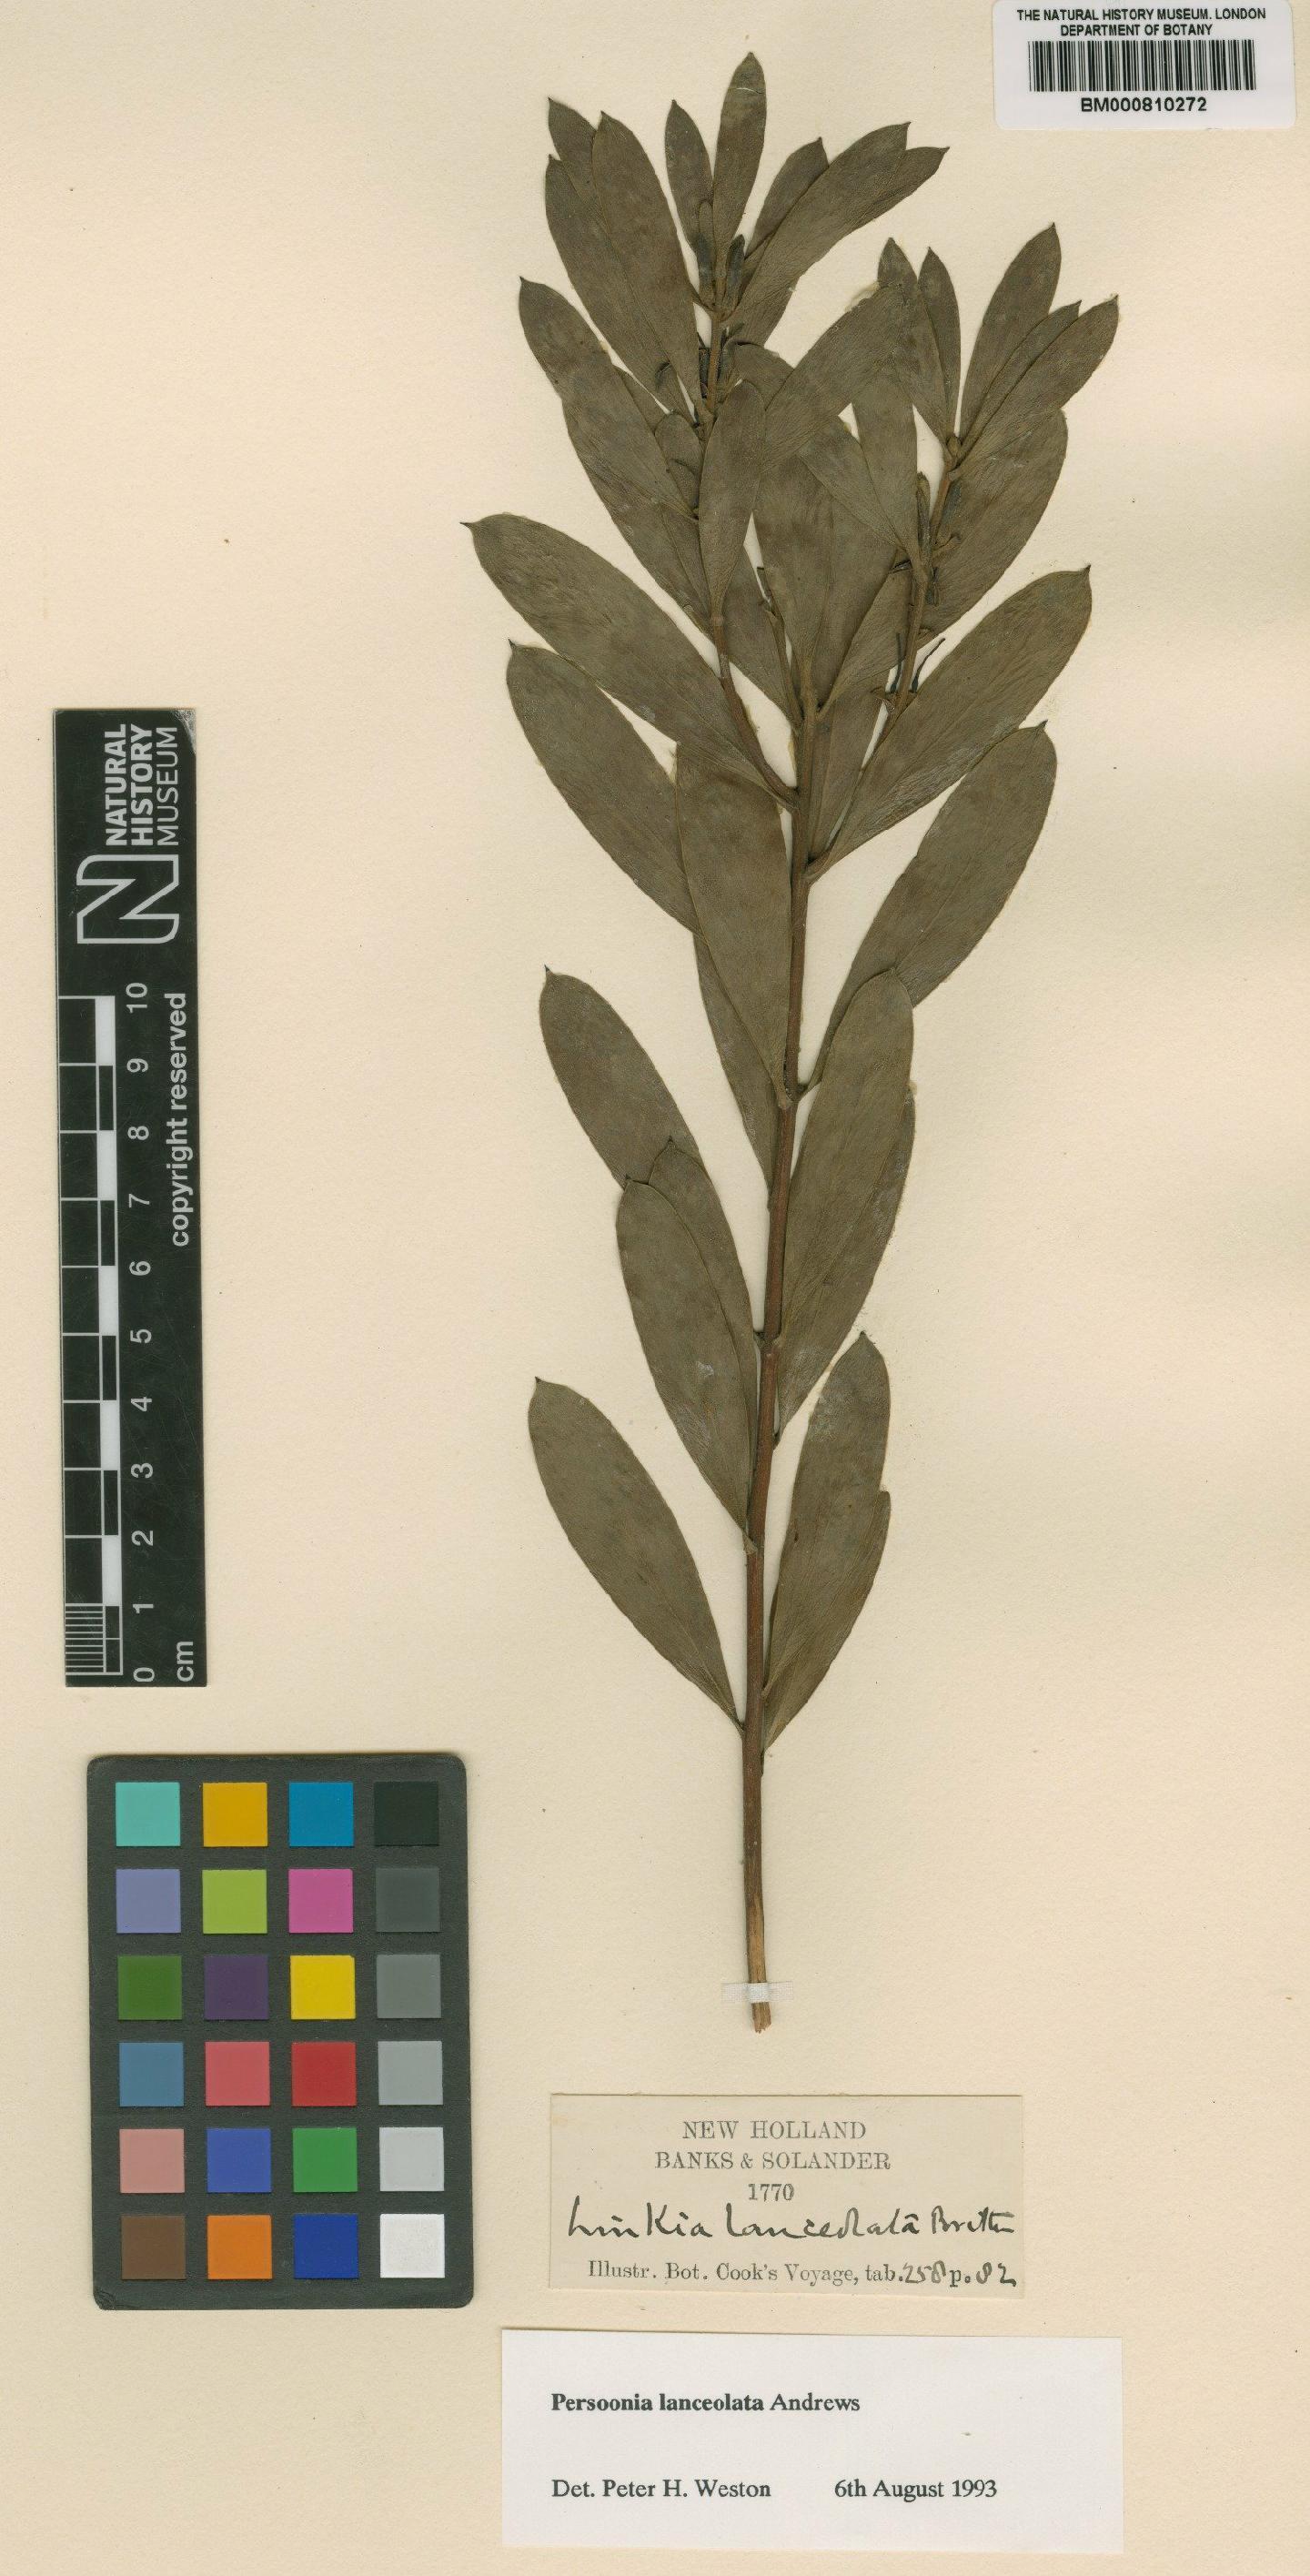 To NHMUK collection (Persoonia lanceolata Andrews; NHMUK:ecatalogue:2304388)